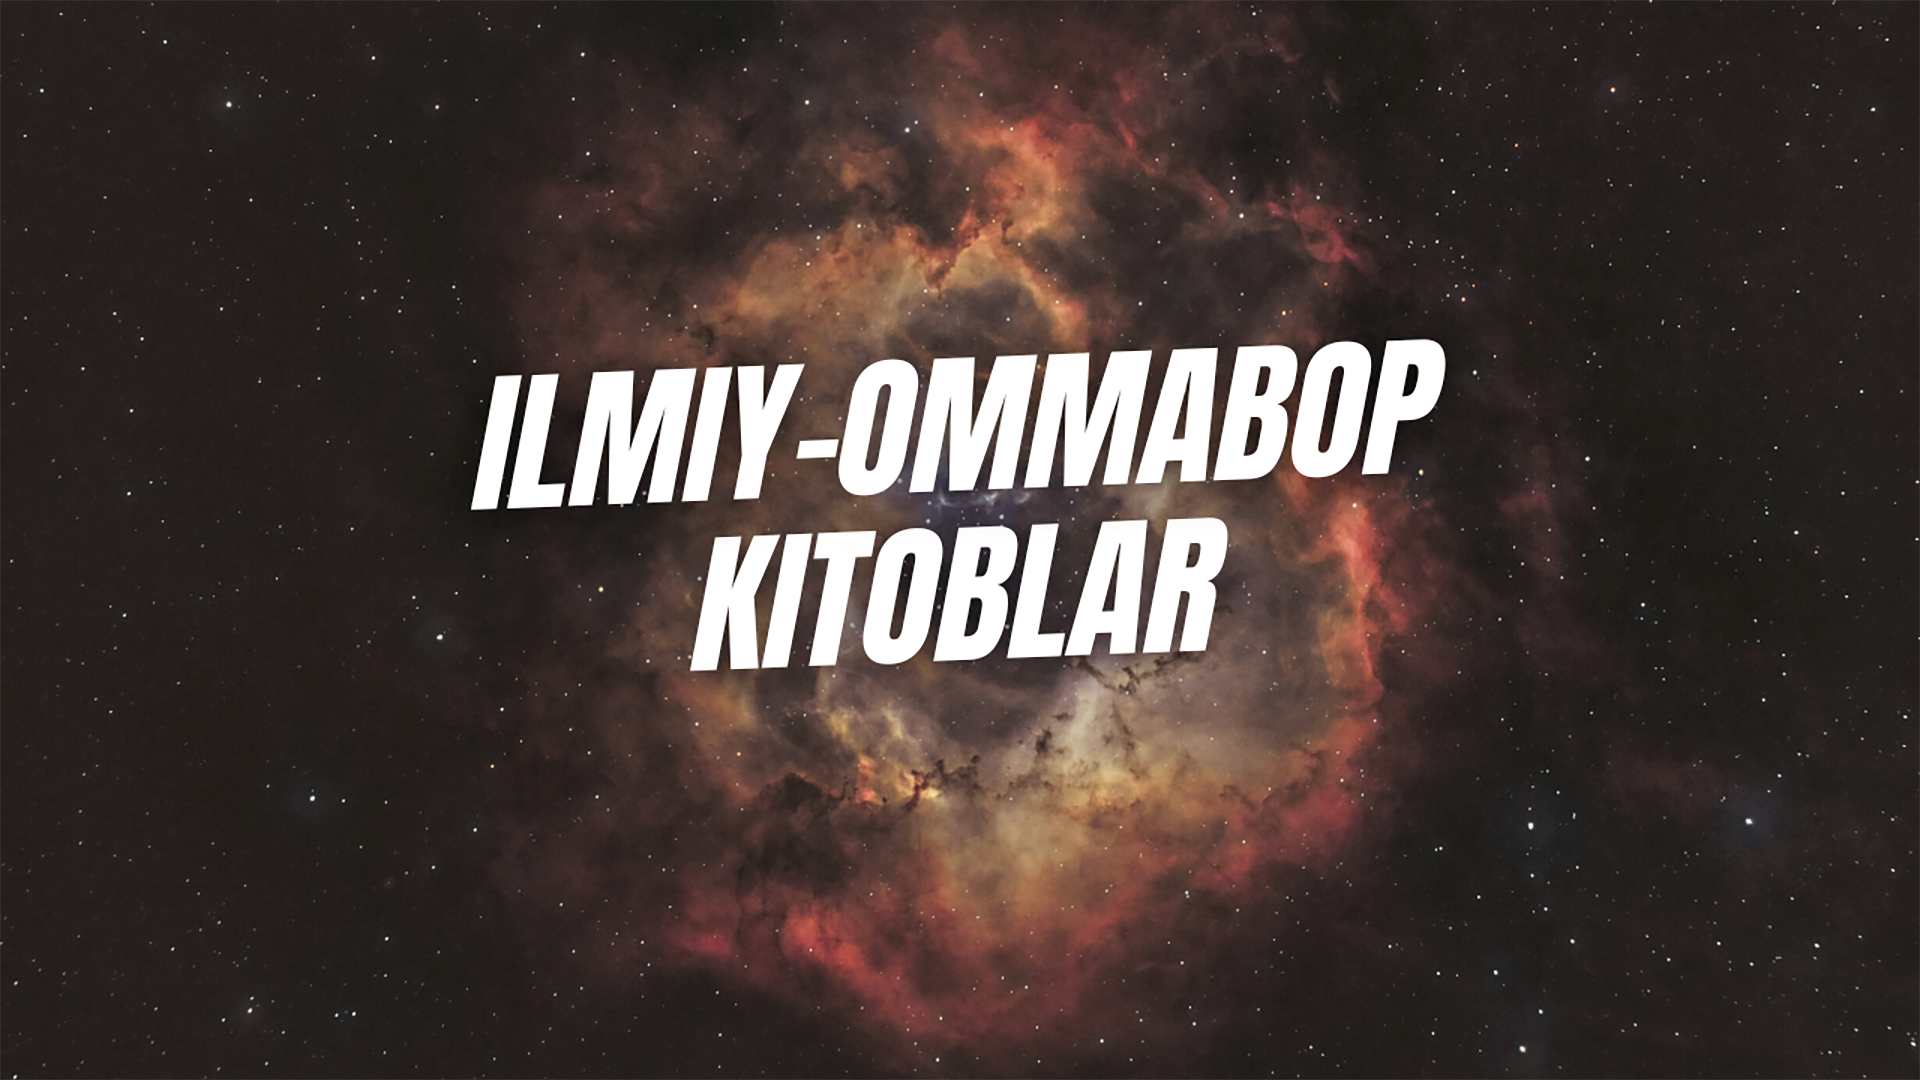 Ilmiy- ommabop